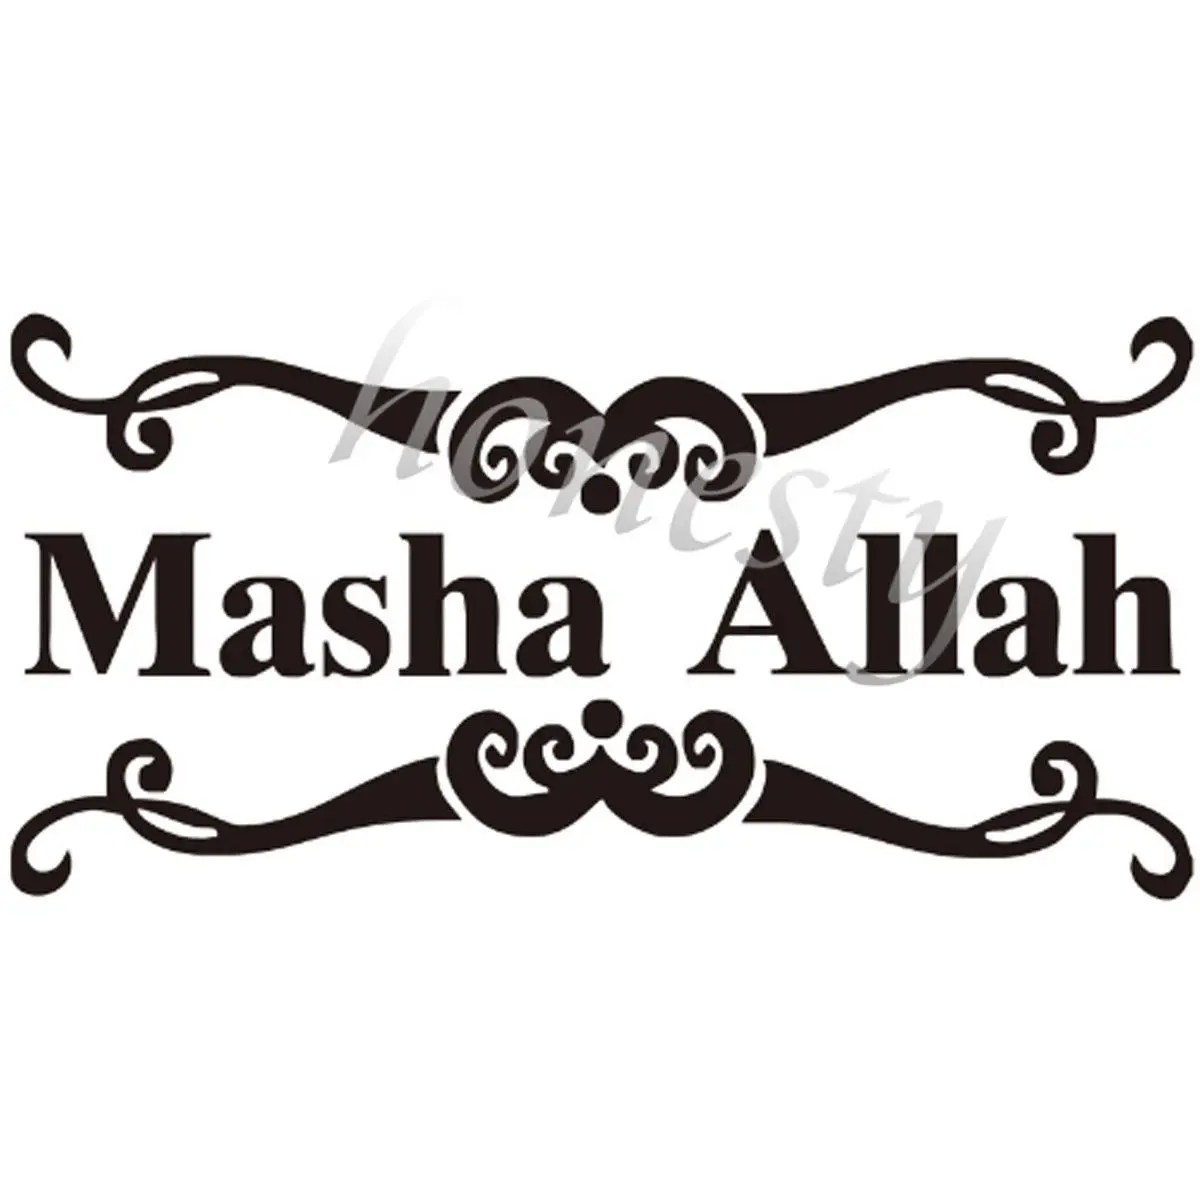 MASHA ALLAH GOD WILL MUSLIM ISLAM Decal Sticker Car Truck Motorcycle Window Ipad